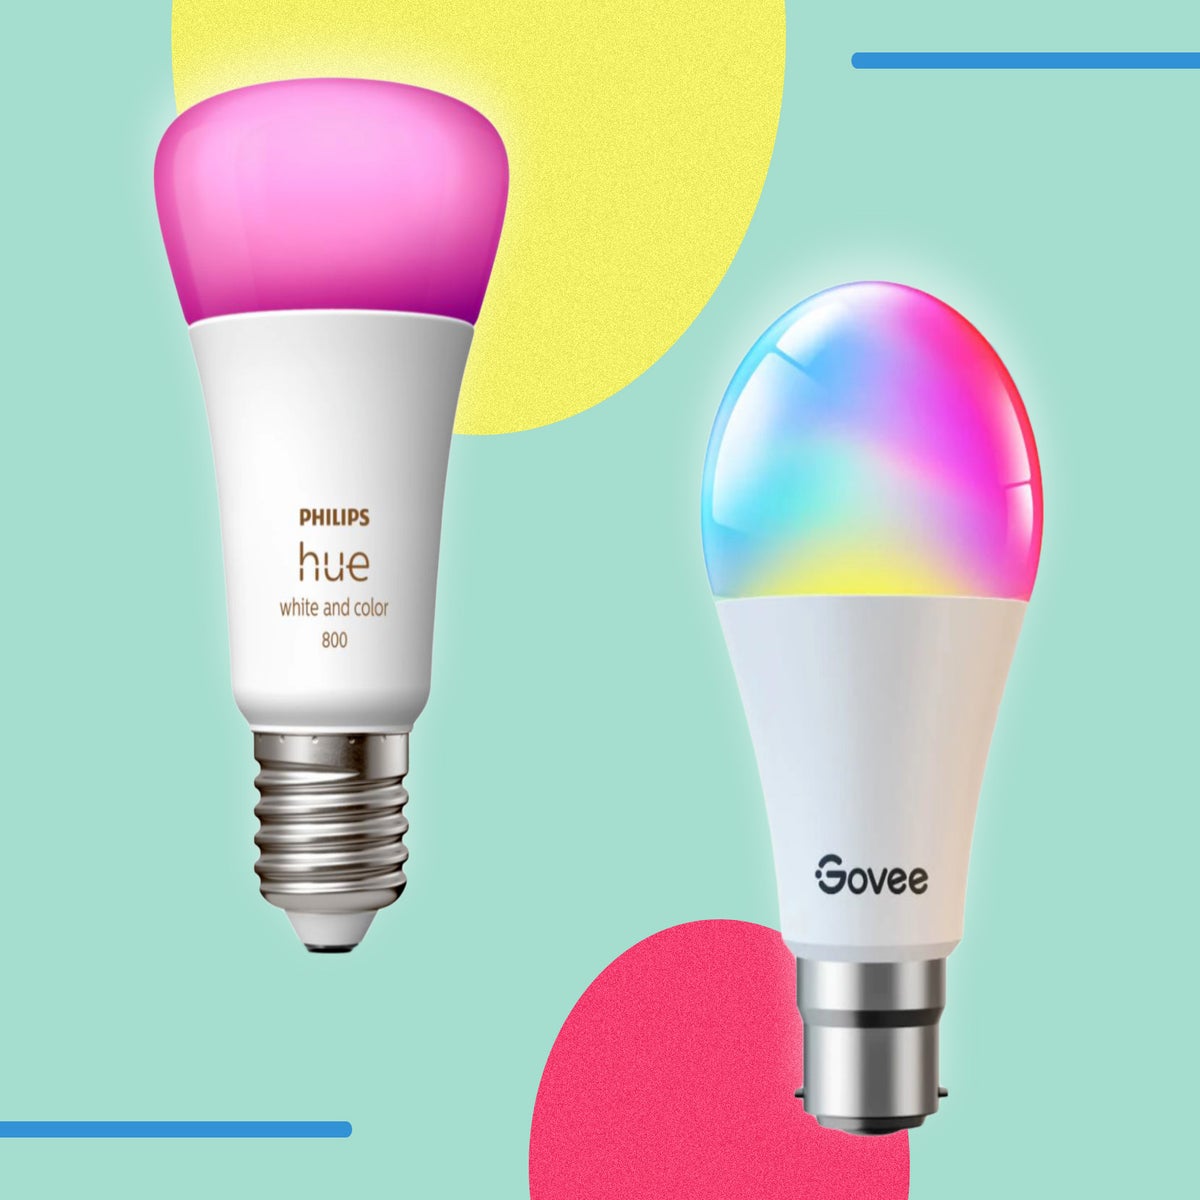 Best Govee light bulbs and light strips 2022